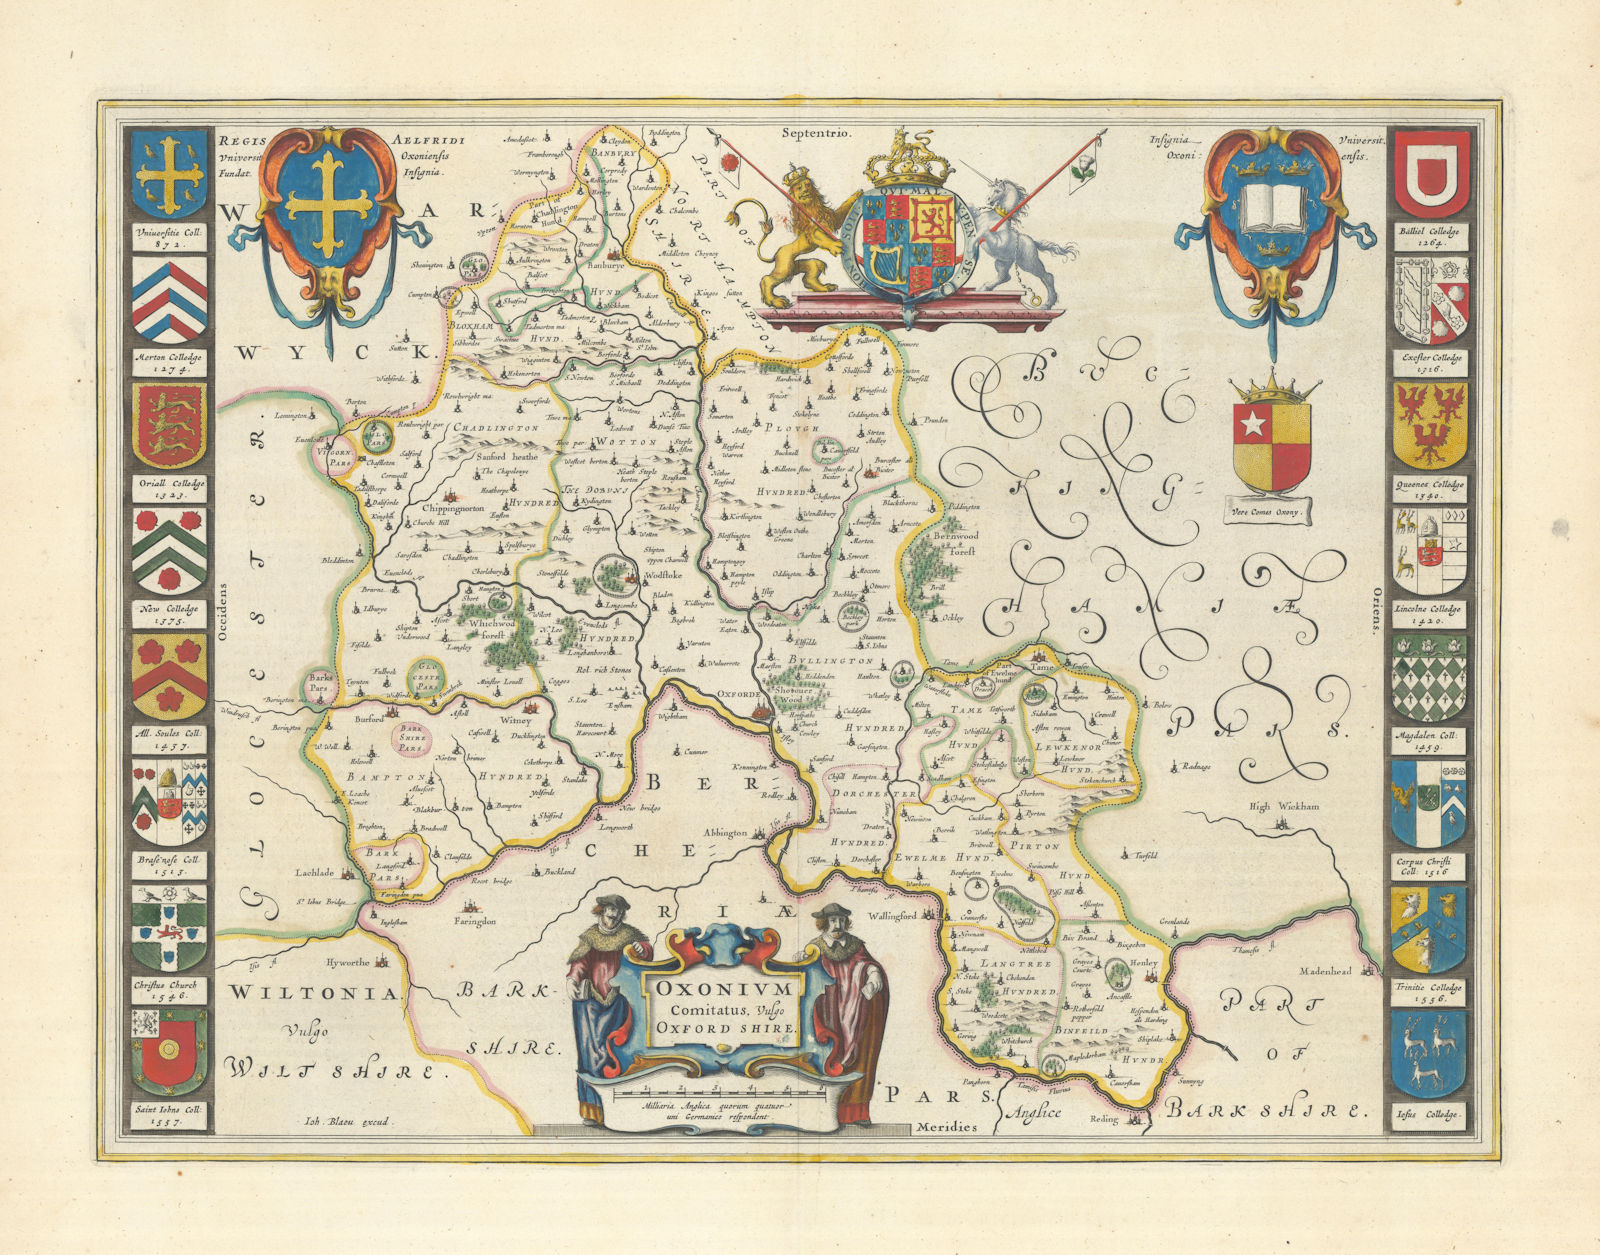 Associate Product Oxonium Comitatus, vulgo Oxfordshire. County map by Blaeu 1645 old antique